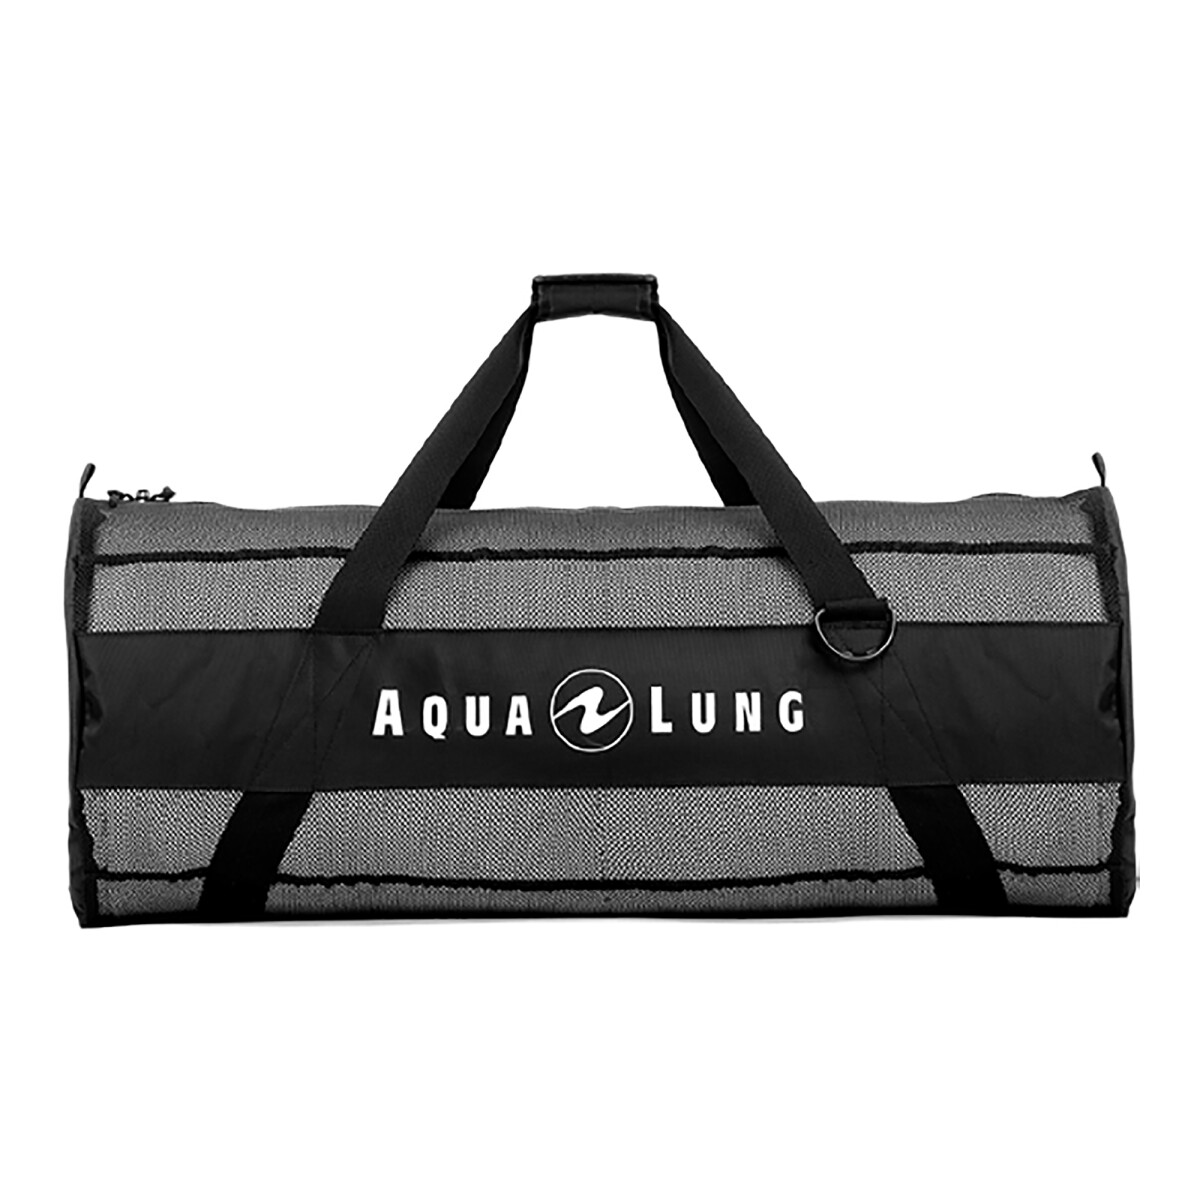 Aqua Lung - Bolso Deportivo Adventurer Mesh Duffle BA1750101 - Poliéster 1680D / Malla de Poliéster - 001 